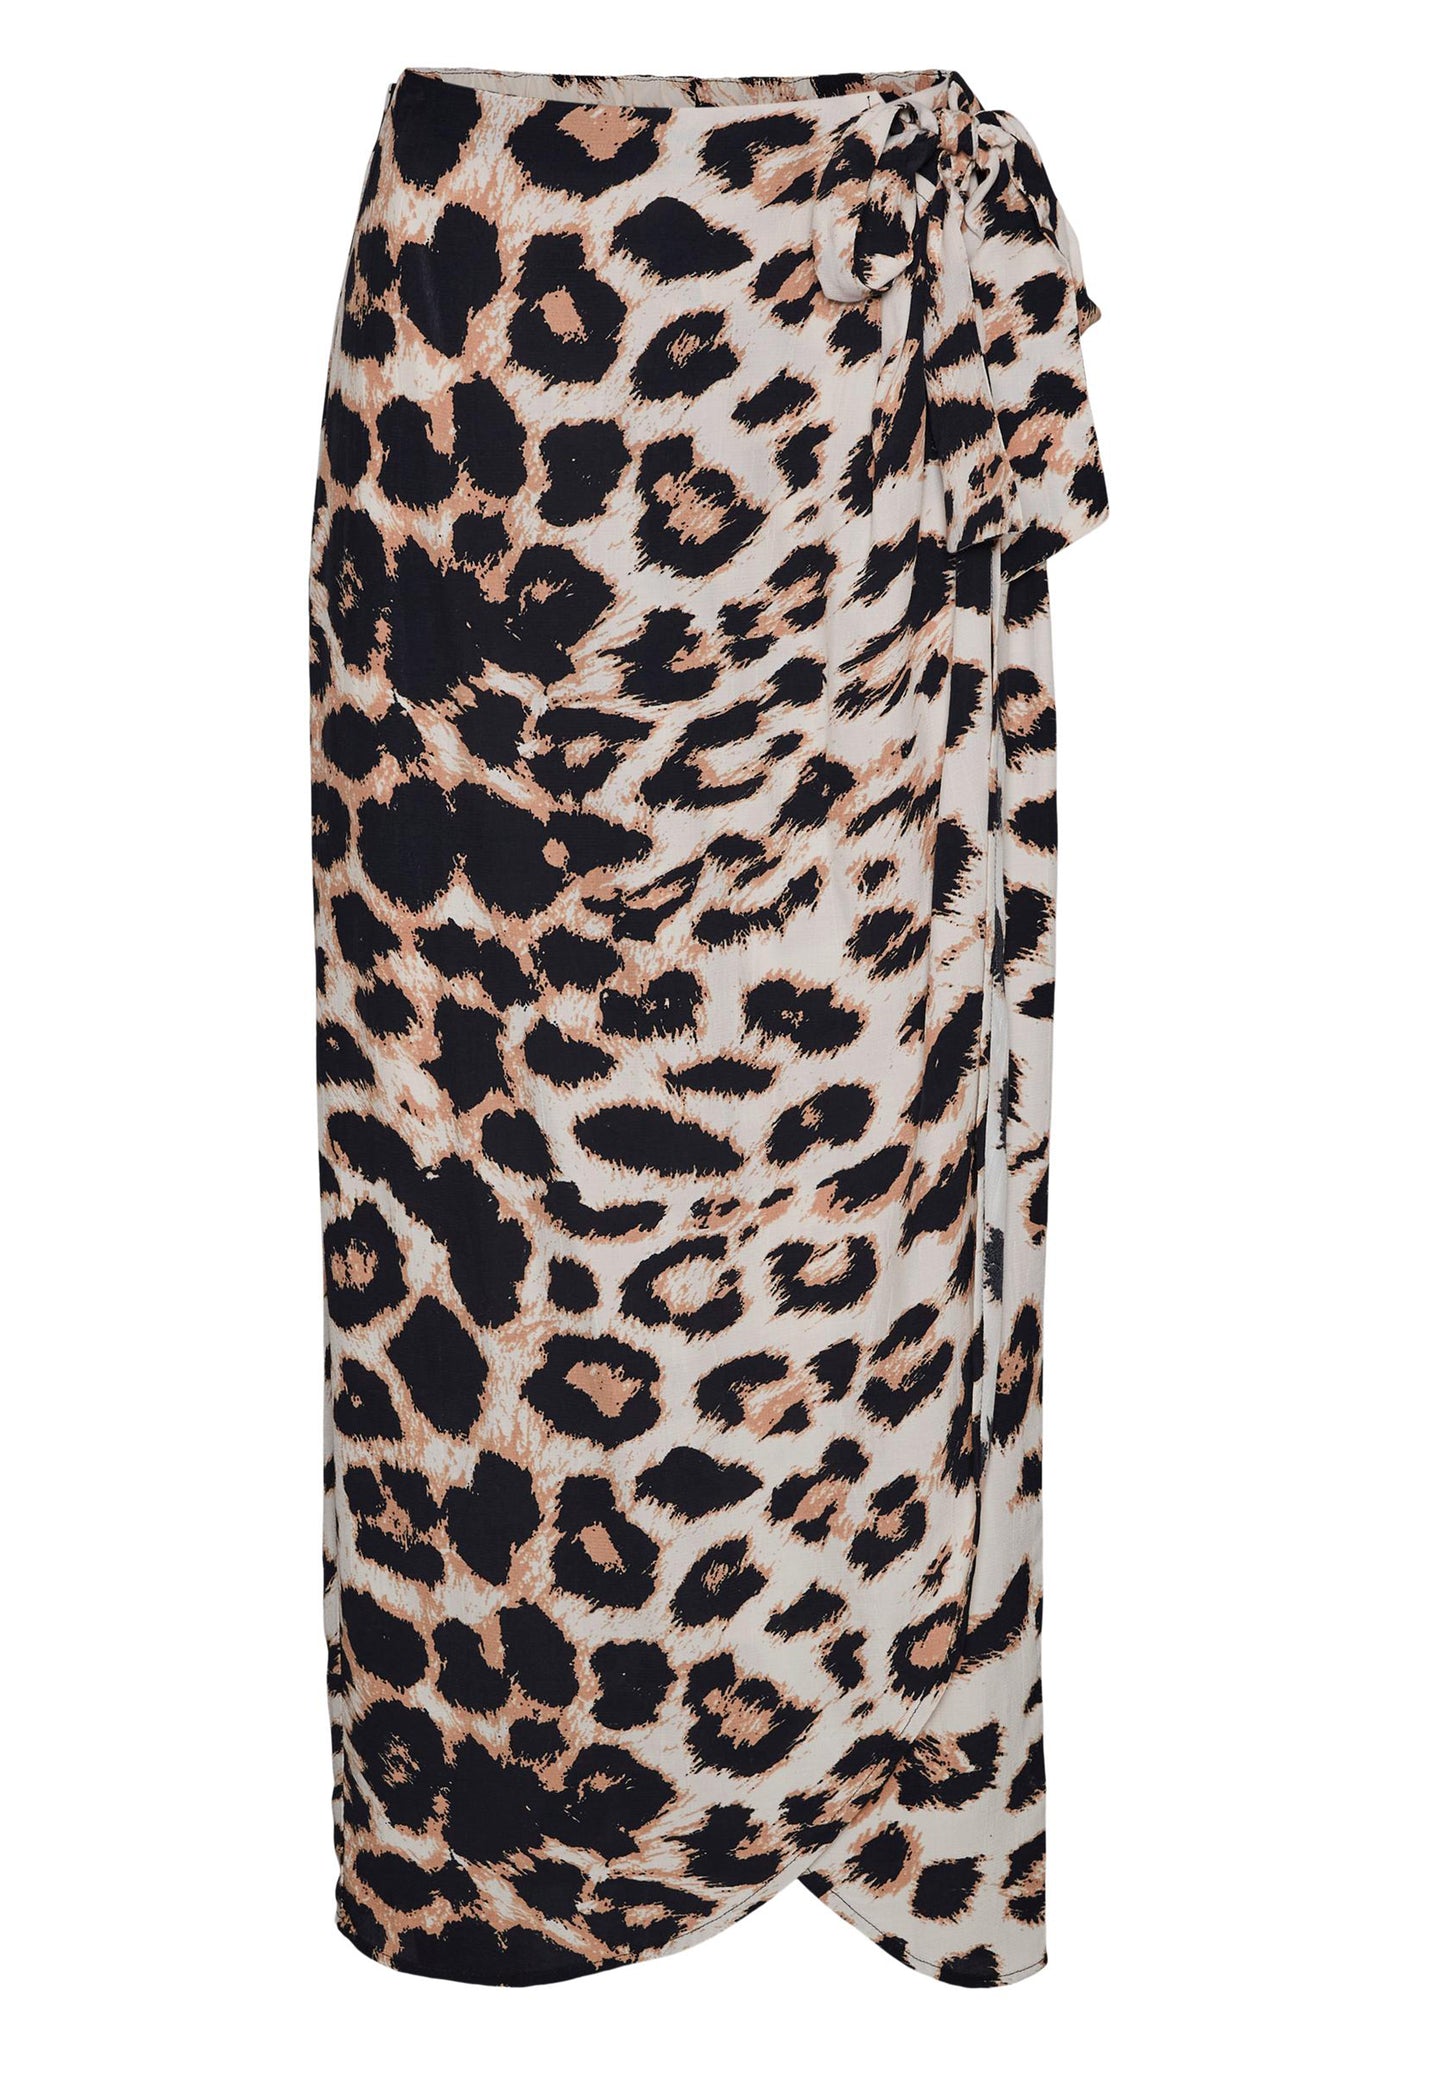 
                  
                    VERO MODA Ulina Leopard Print Wrap Midi Skirt in Brown & Black - One Nation Clothing
                  
                